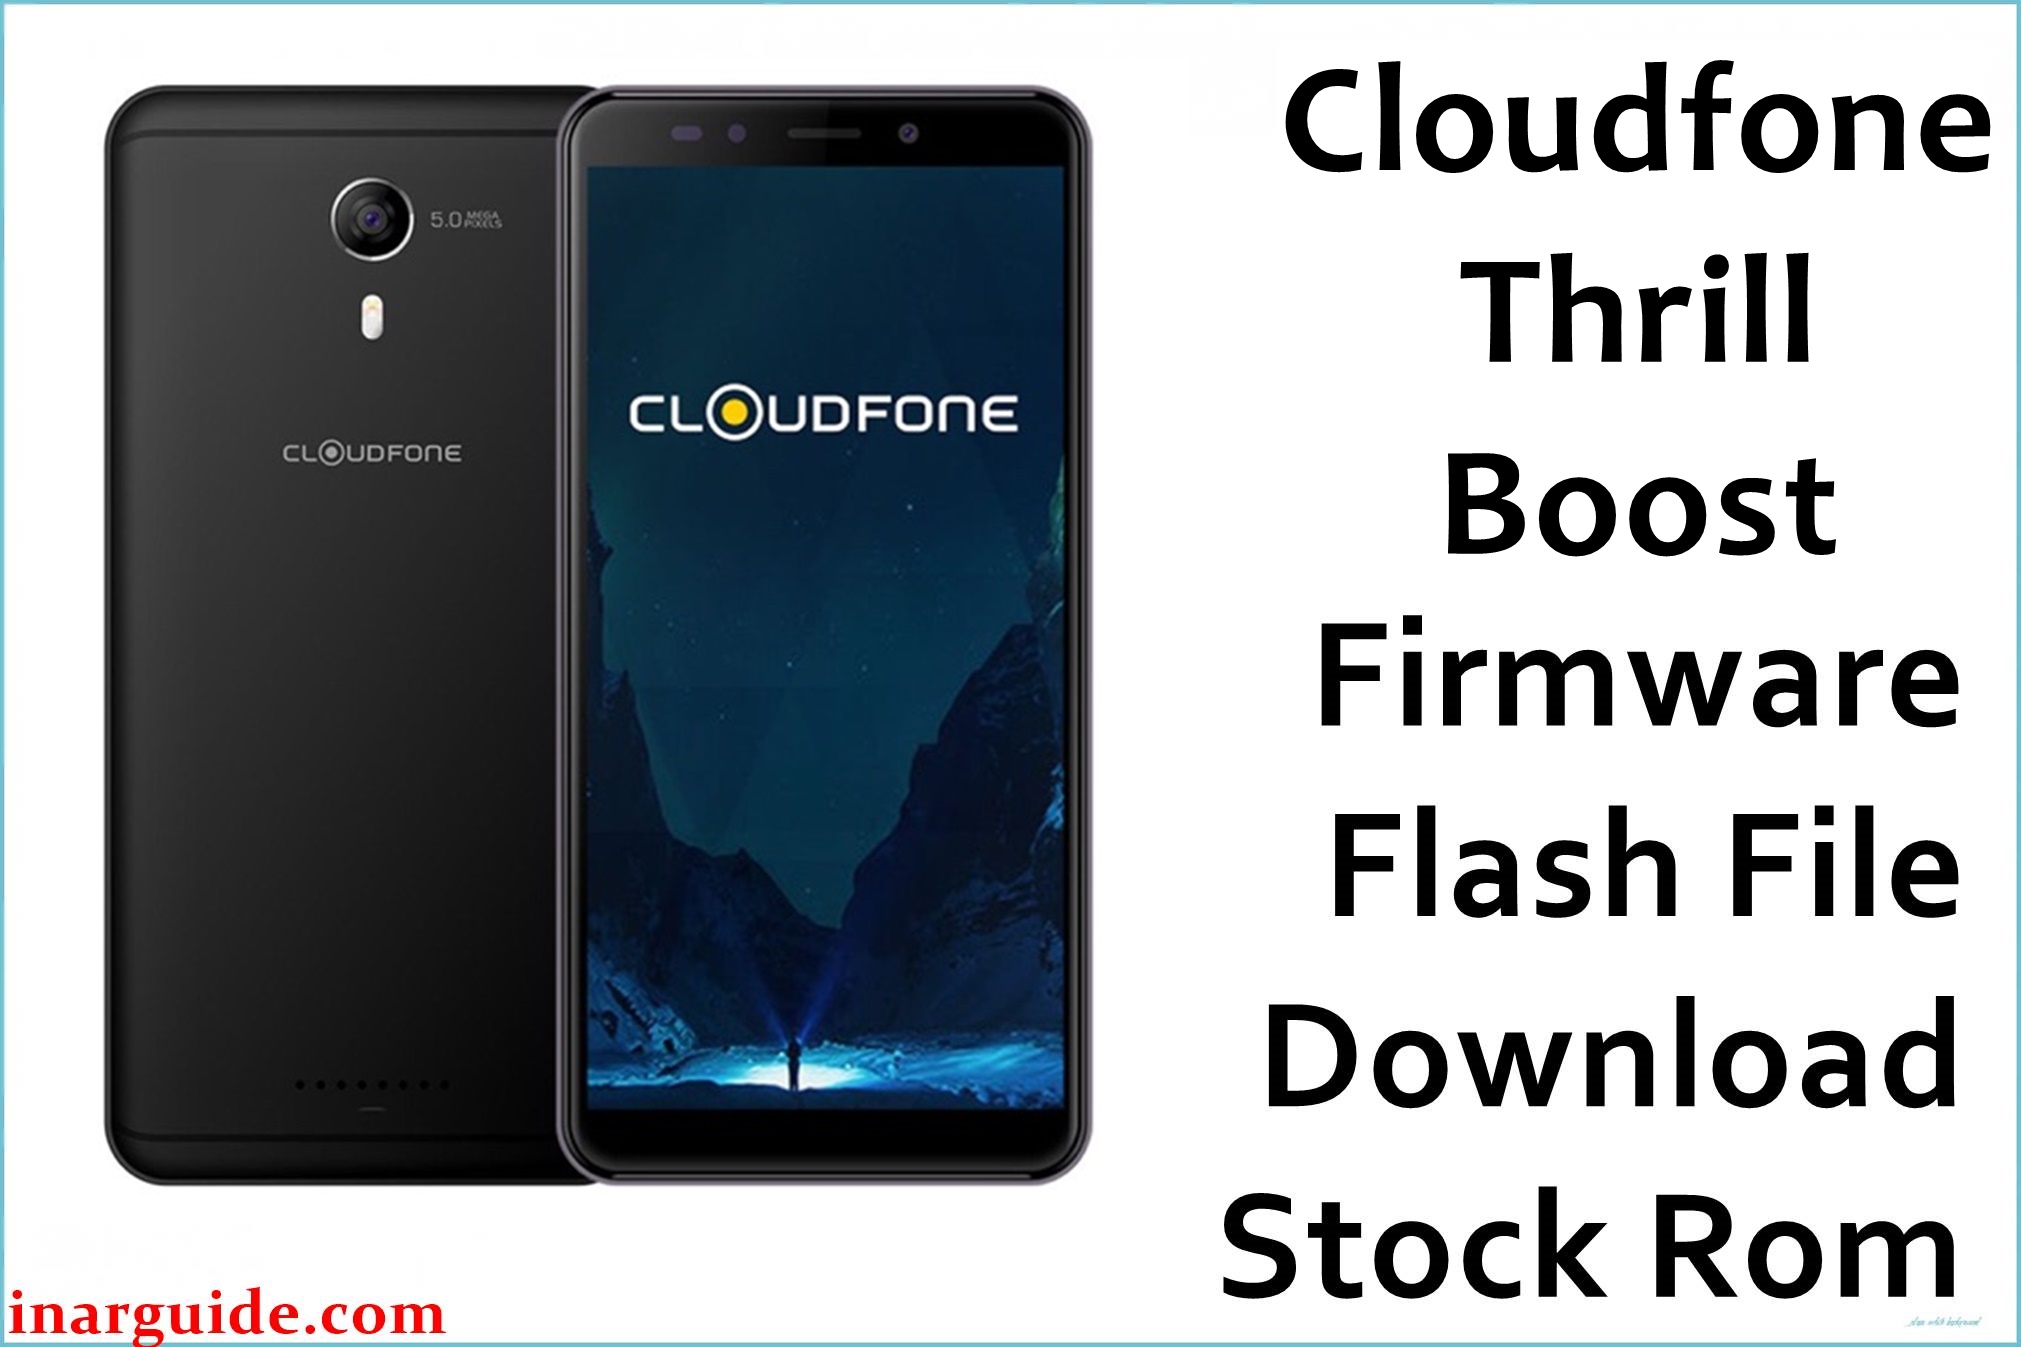 Cloudfone Thrill Boost